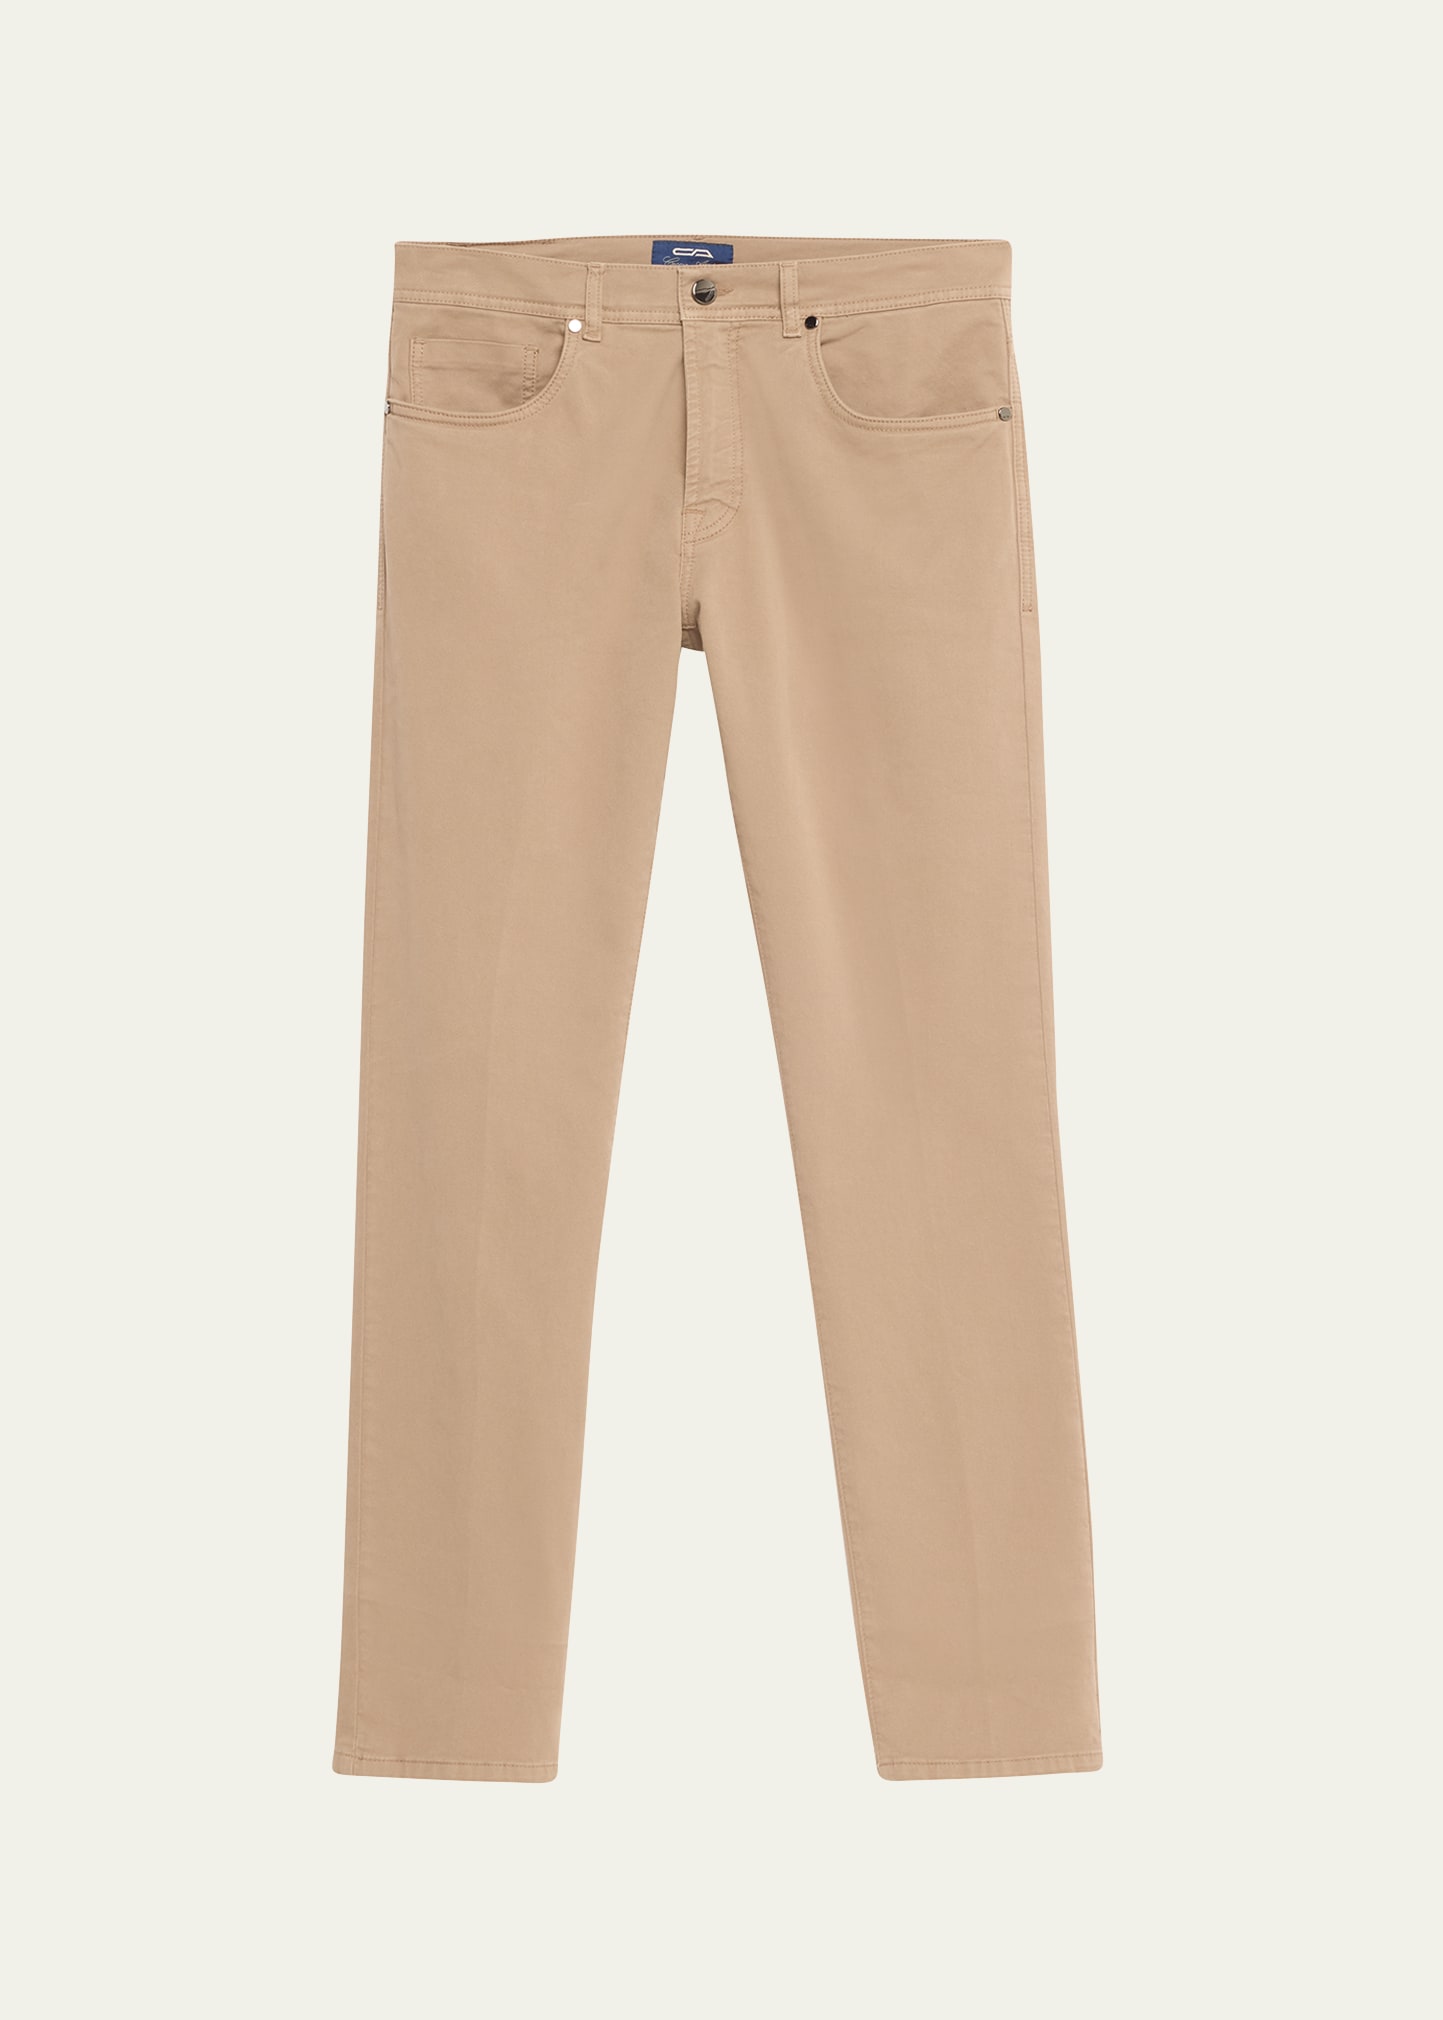 Men's Cotton-Stretch Slim 5-Pocket Pants